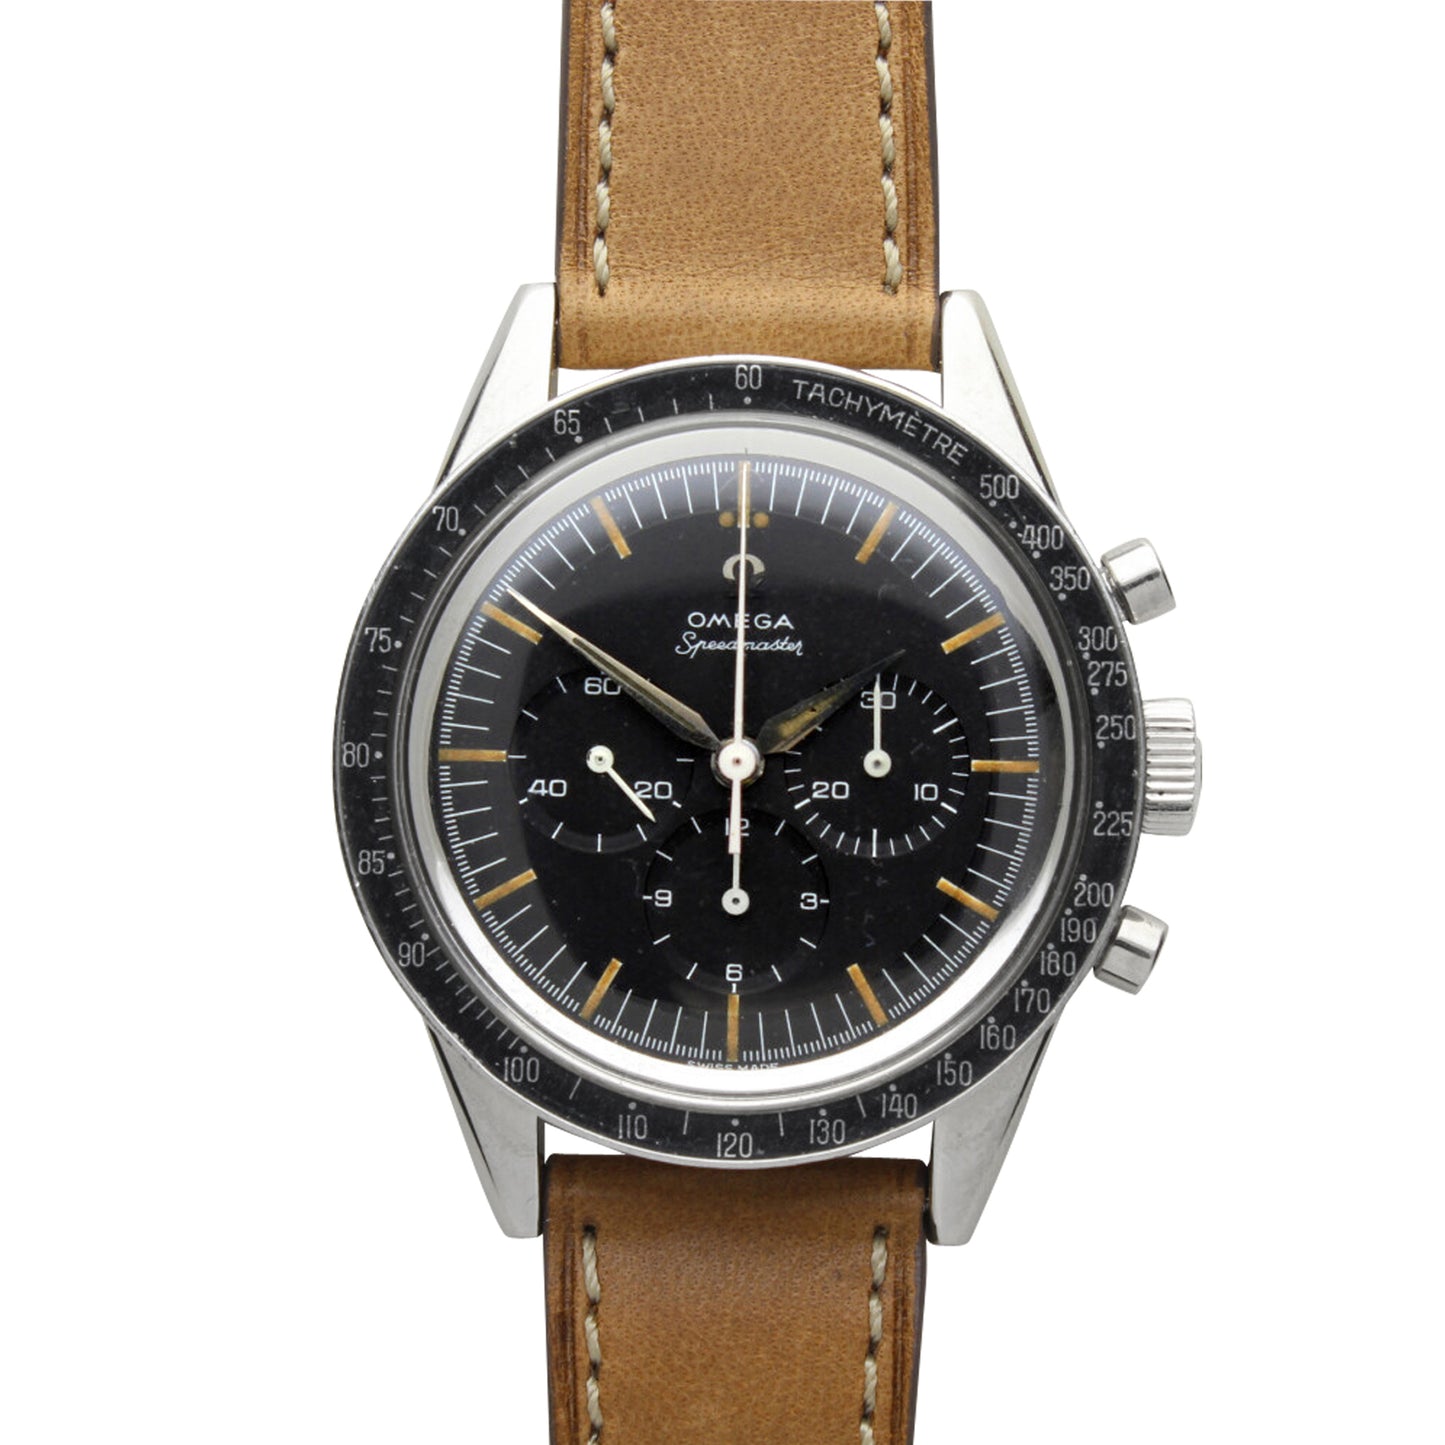 Stainless steel OMEGA Speedmaster ref 2998/4 wristwatch. Made 1961